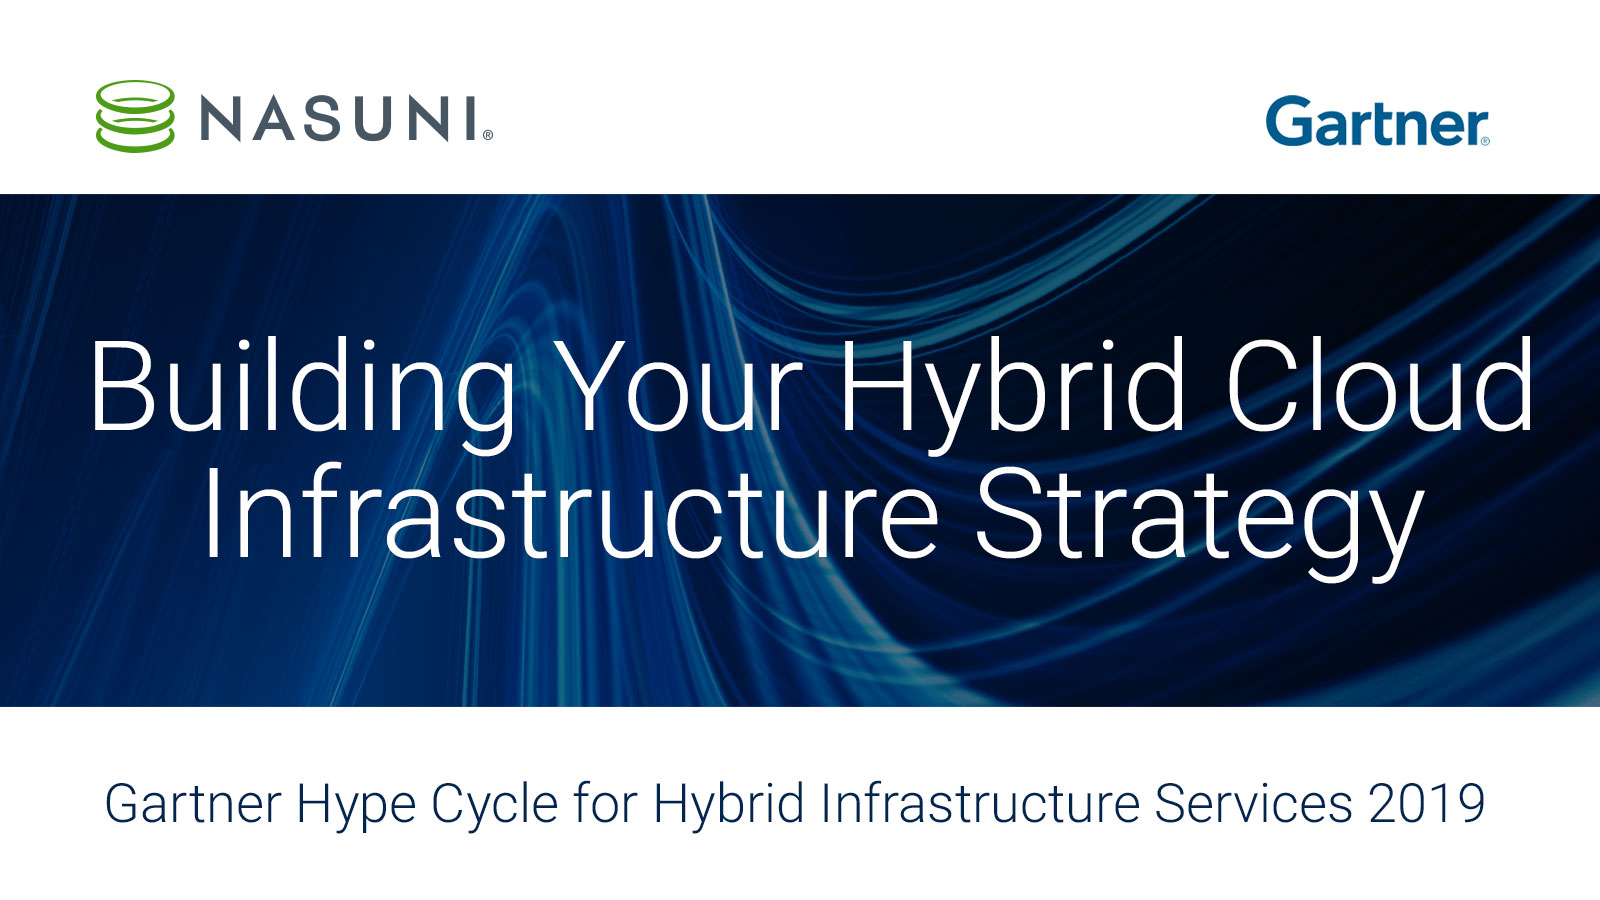 Beyond the Hype: Gartner Highlights Strategic Benefits of Hybrid Cloud Storage